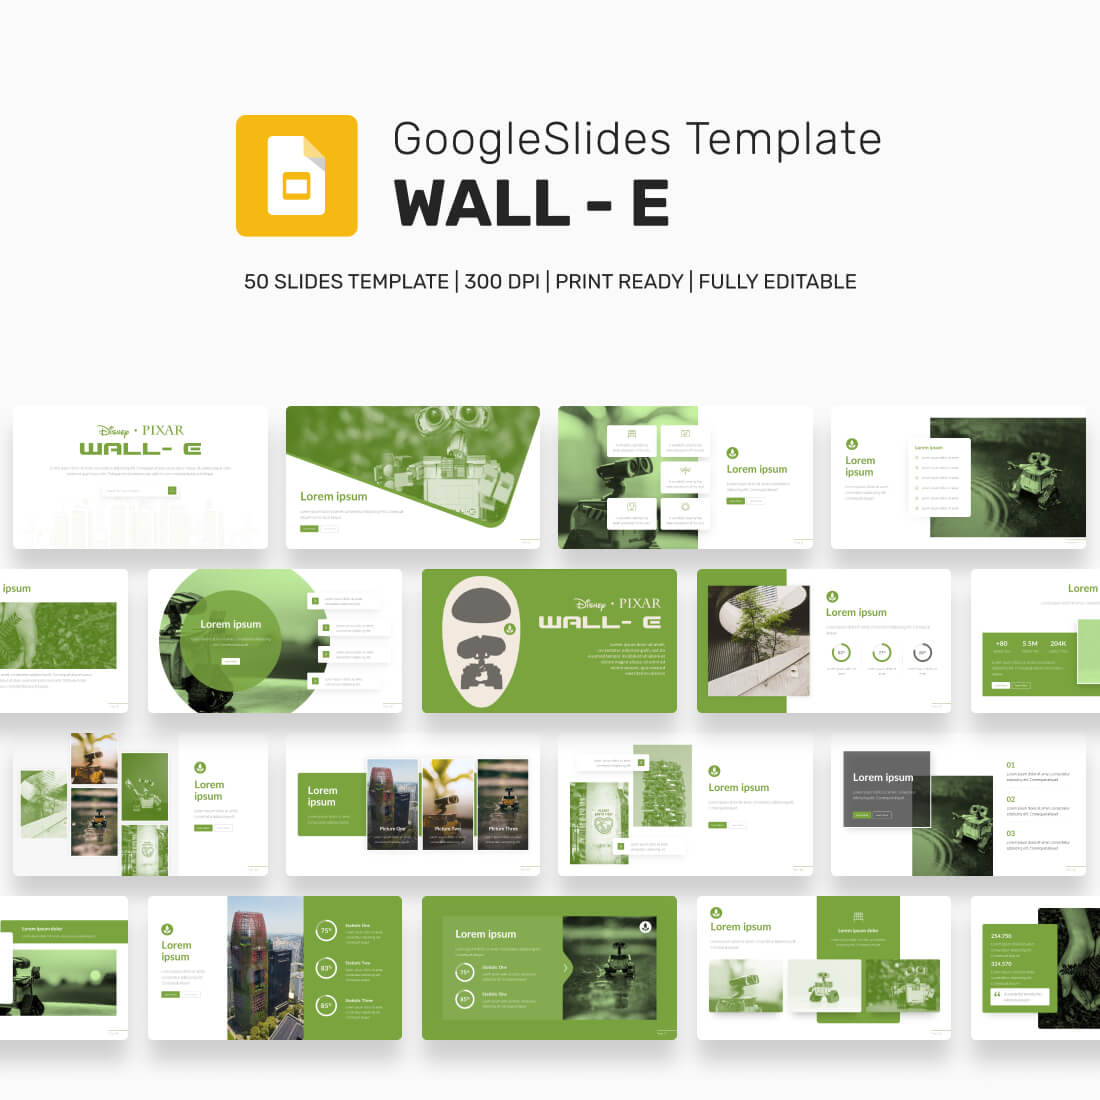 Wall-E Disney Google Slides Themes cover image.